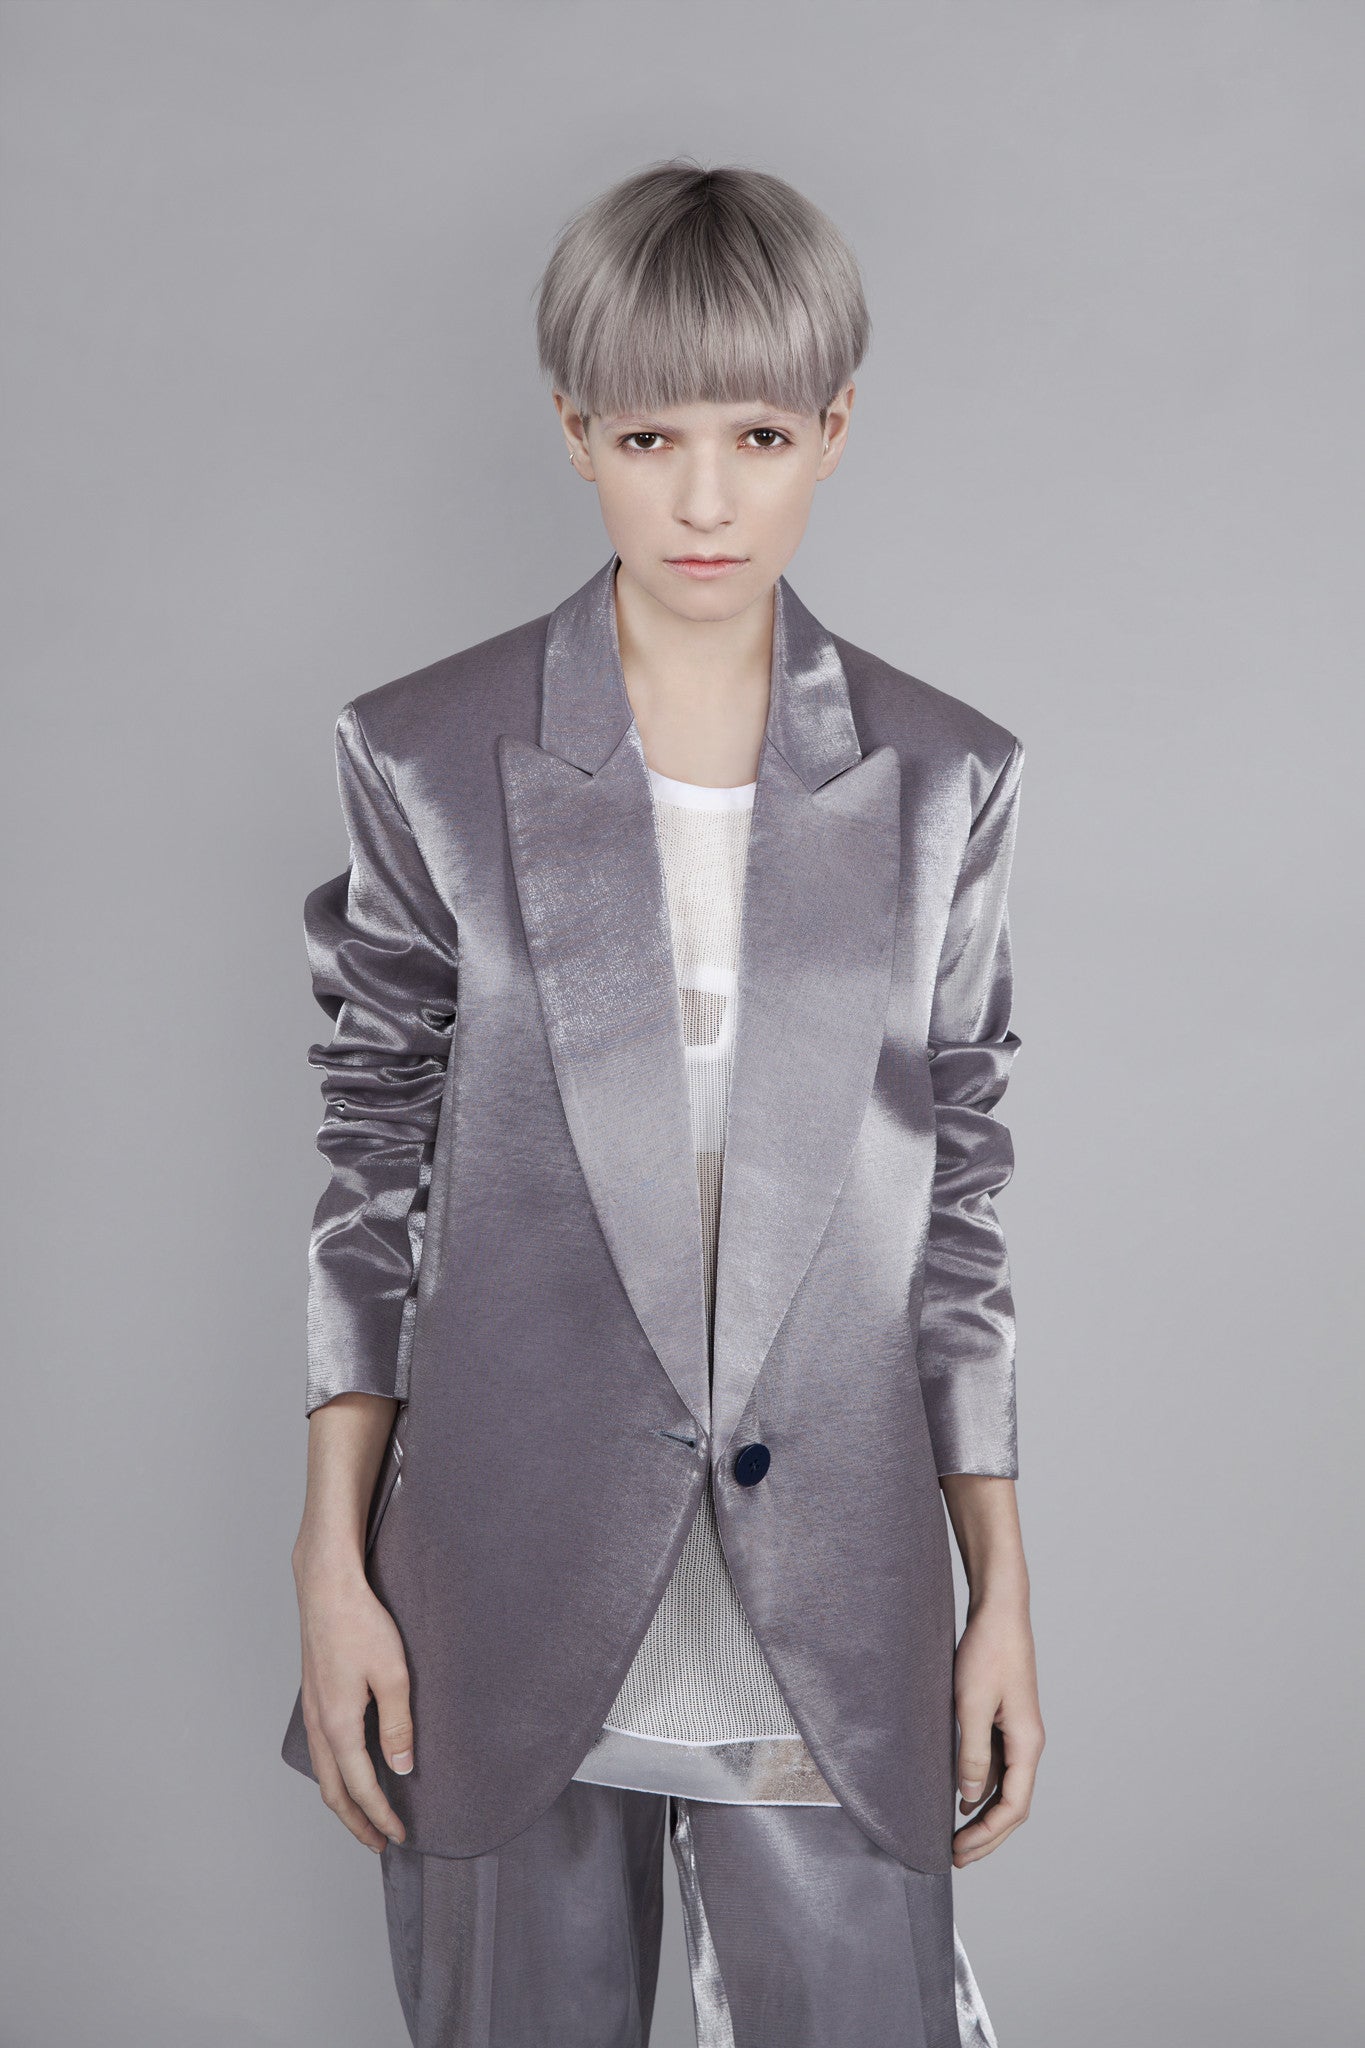 High Shine Silver "Tria" Formal Jacket